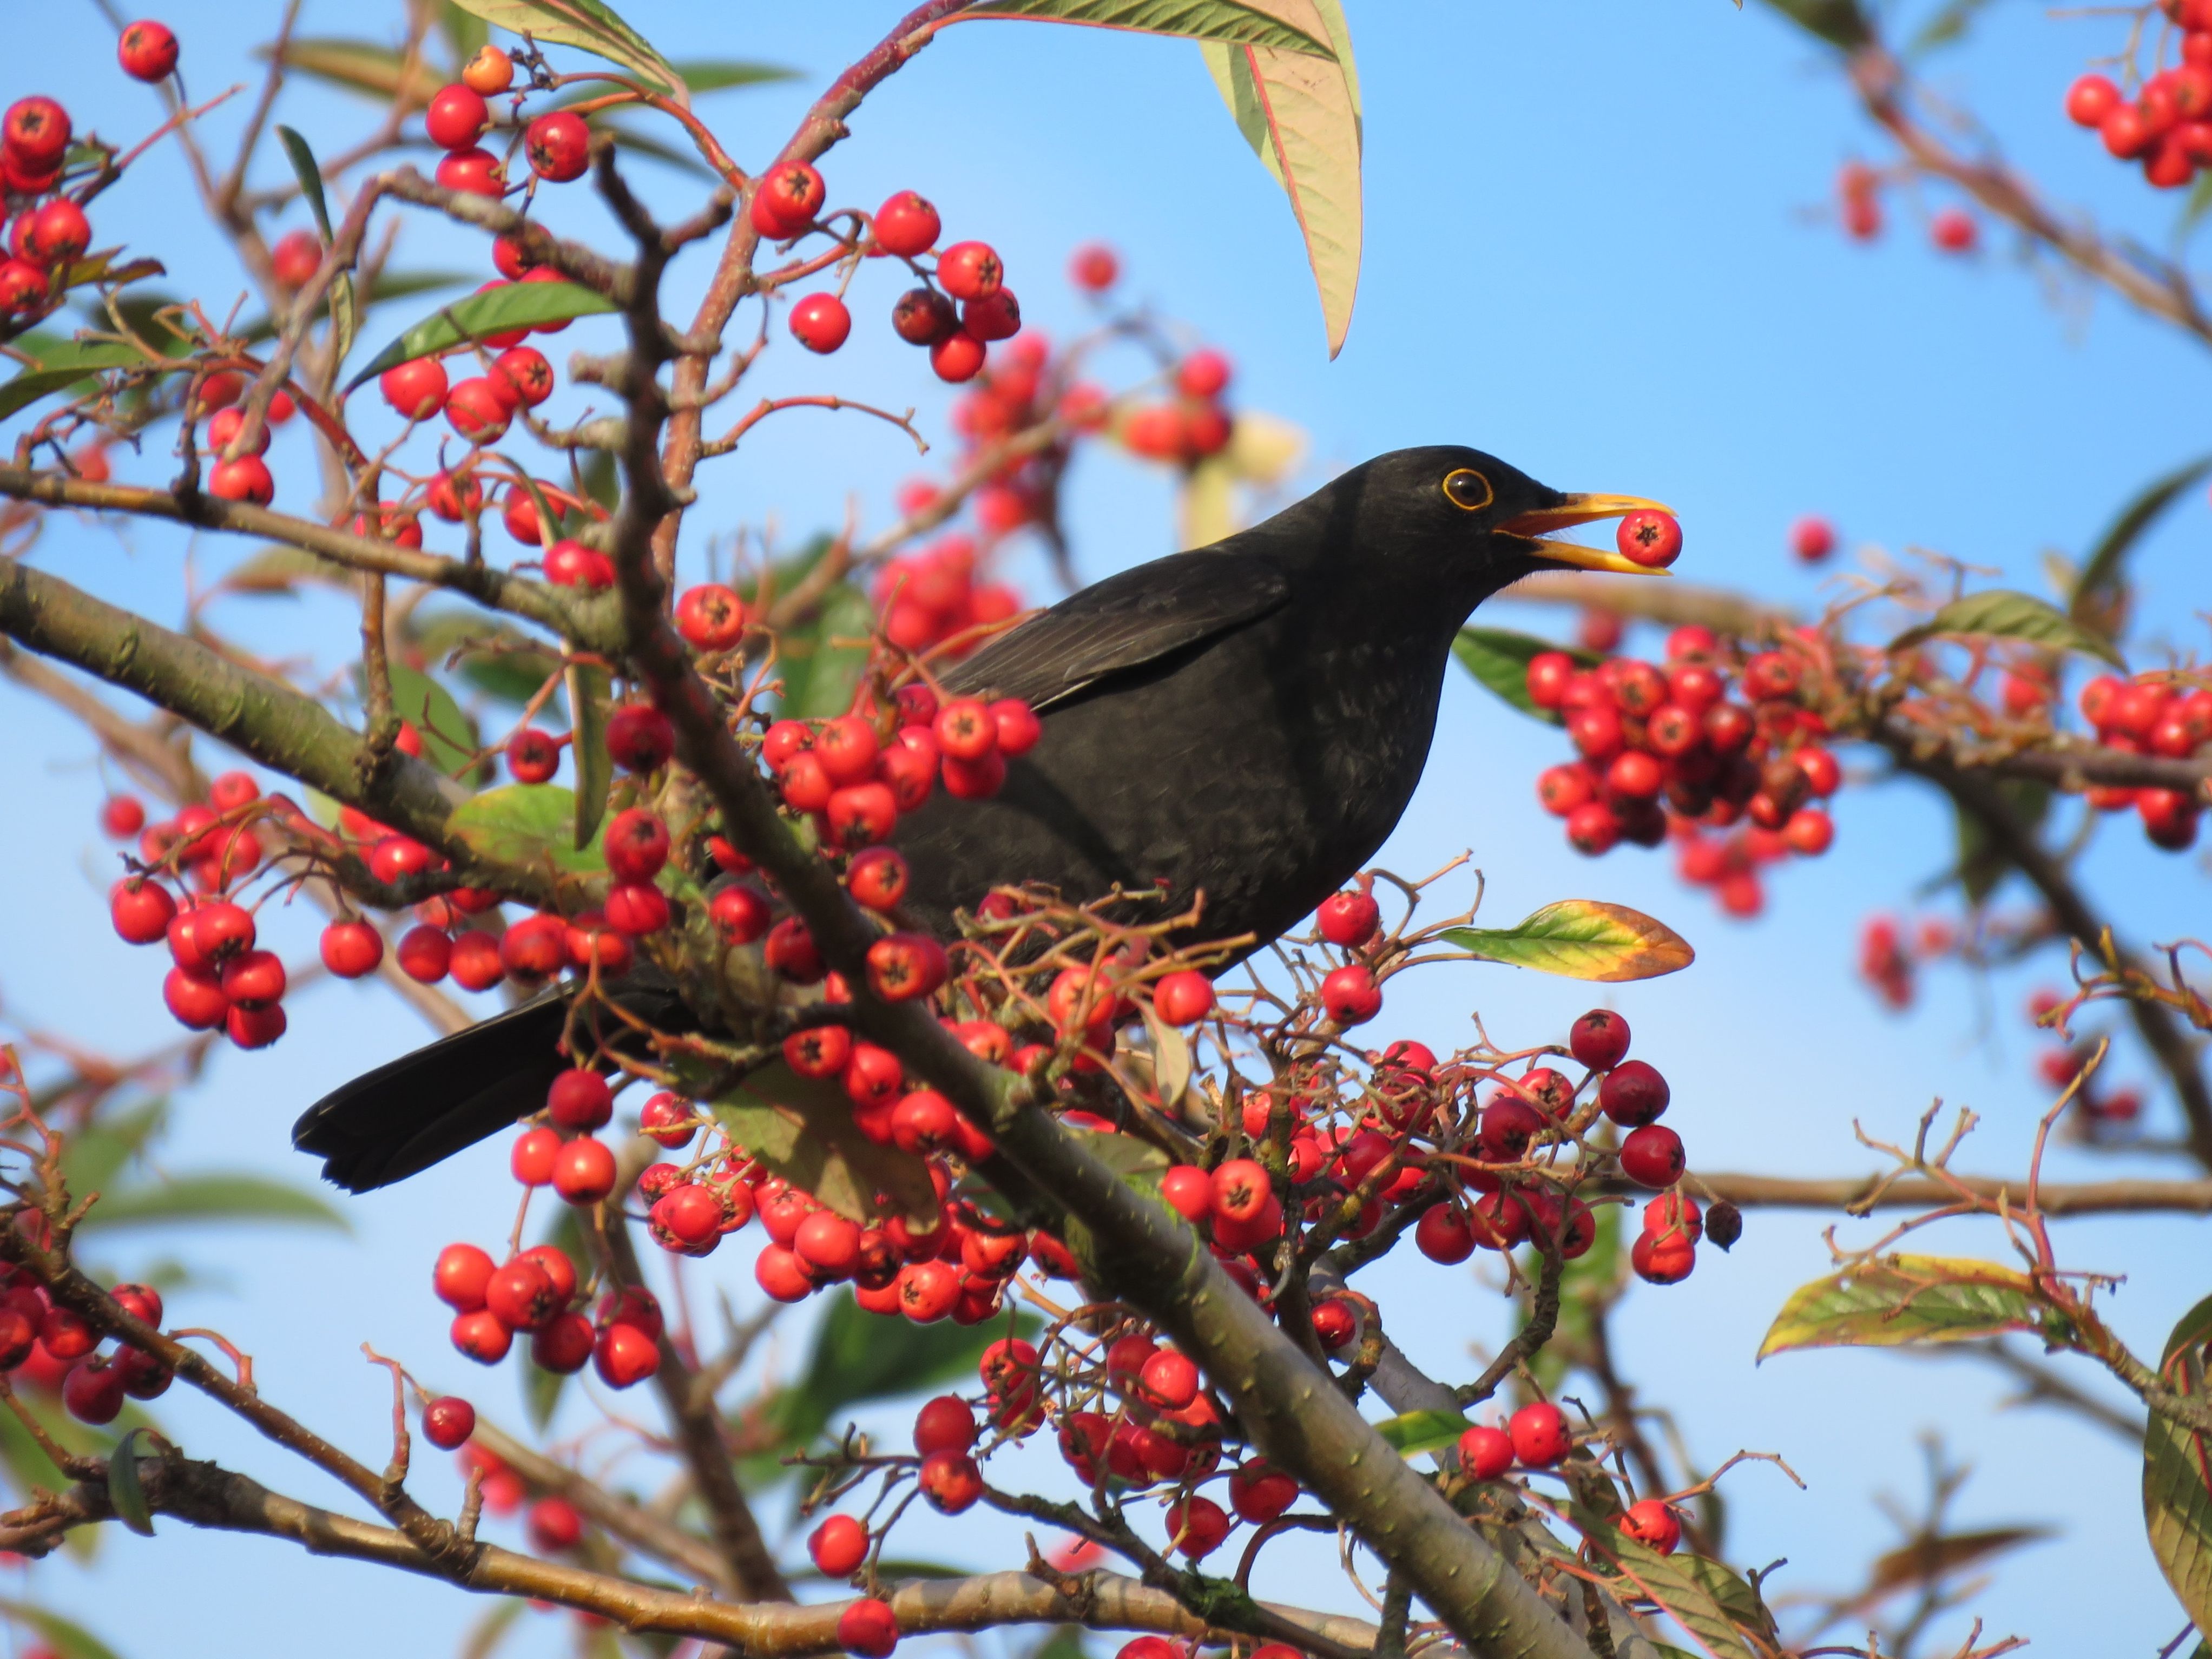 Blackbird eating berries on a tree branch